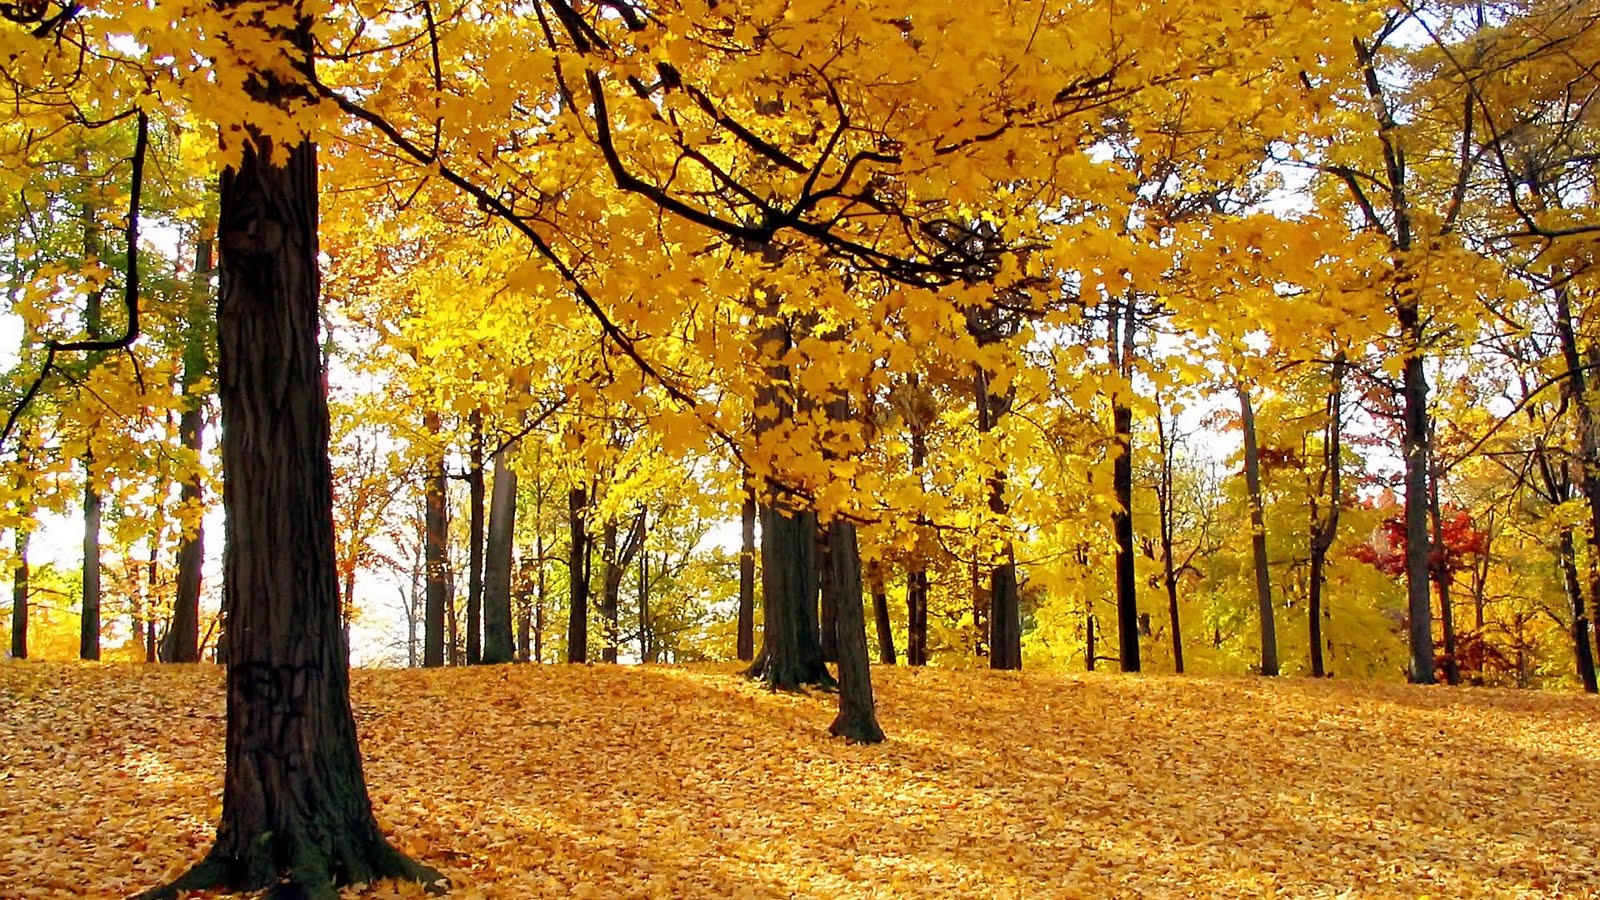 autumn trees 1080p full hd widescreen desktop